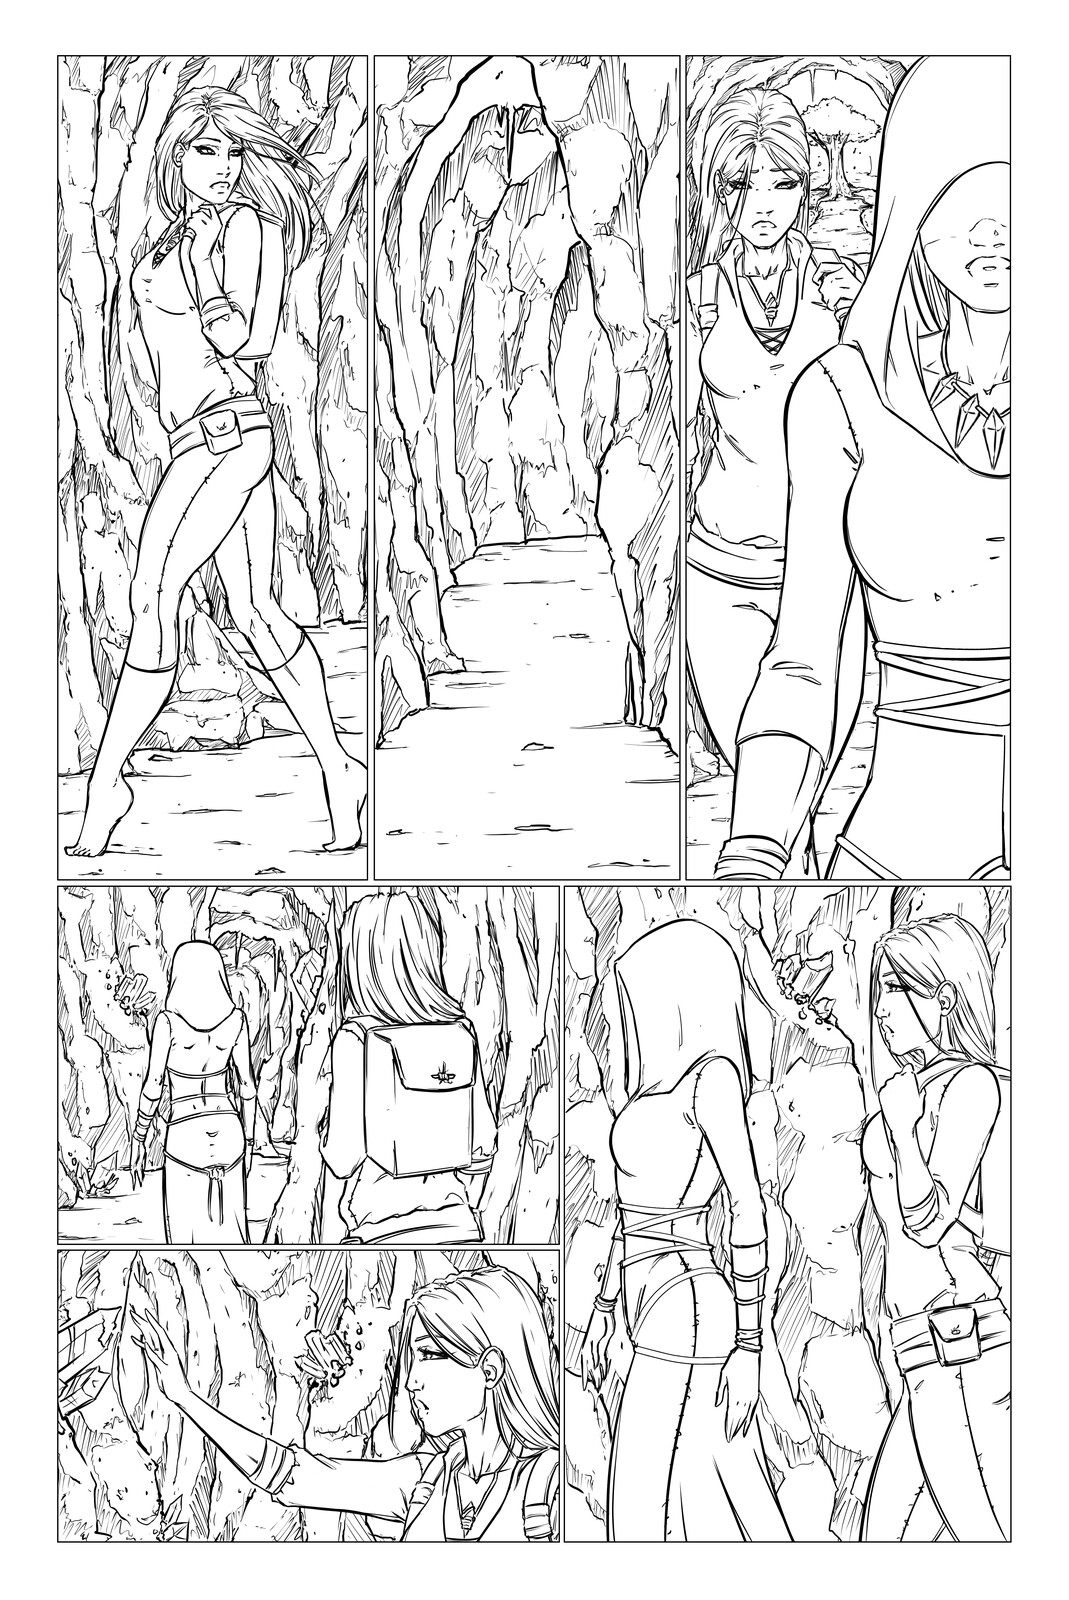 Page 11 - Line art